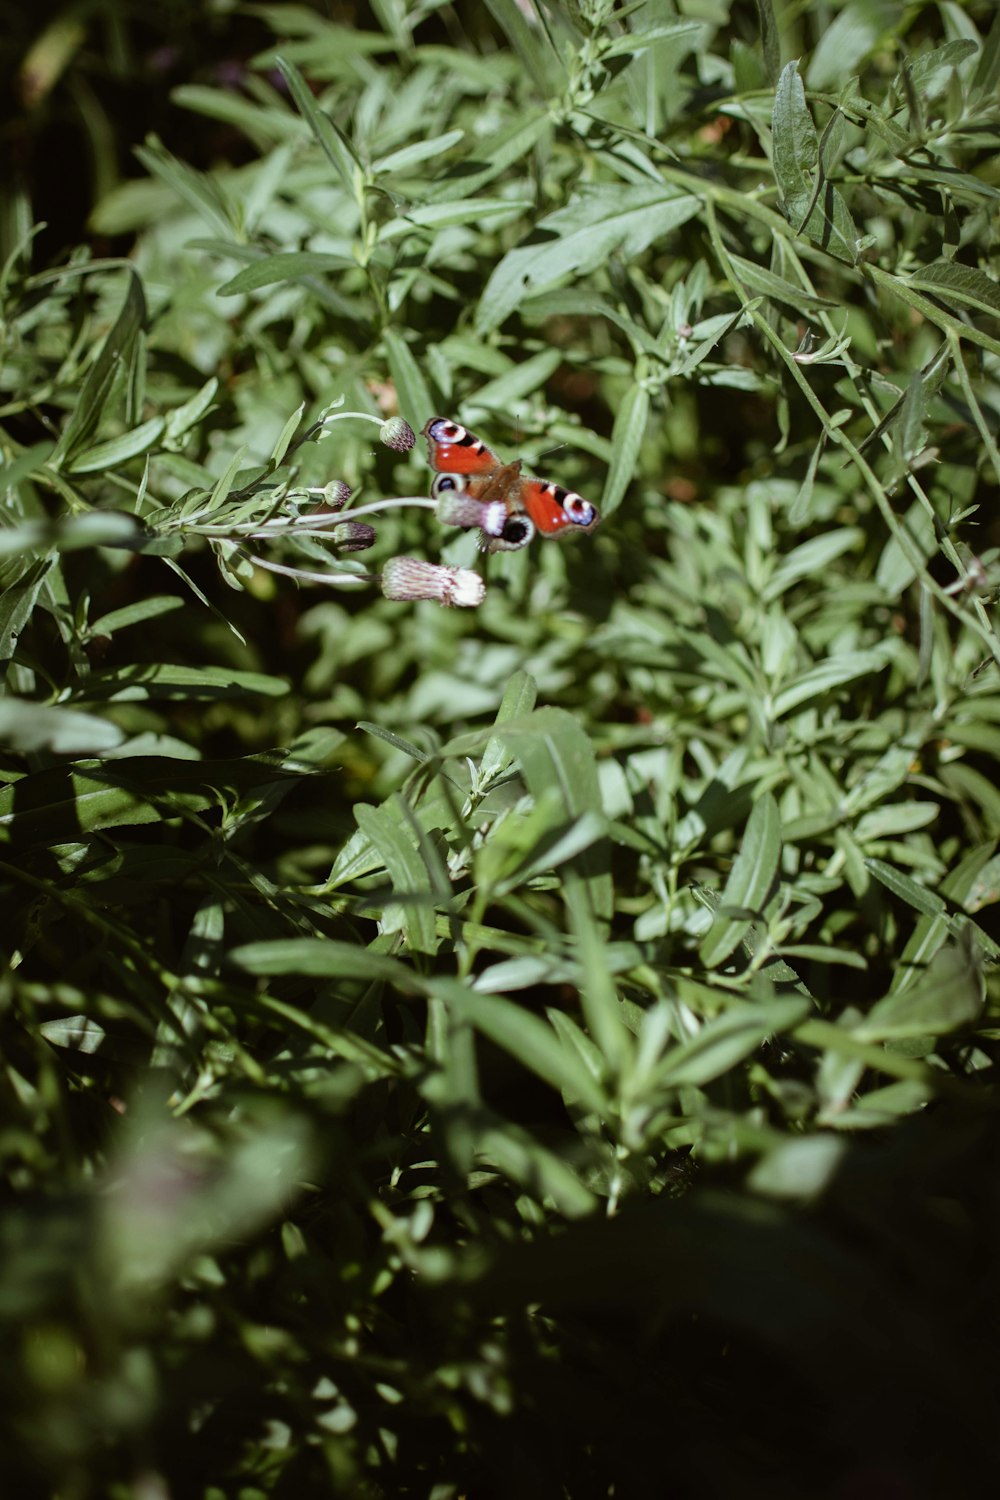 red ladybug on green plant